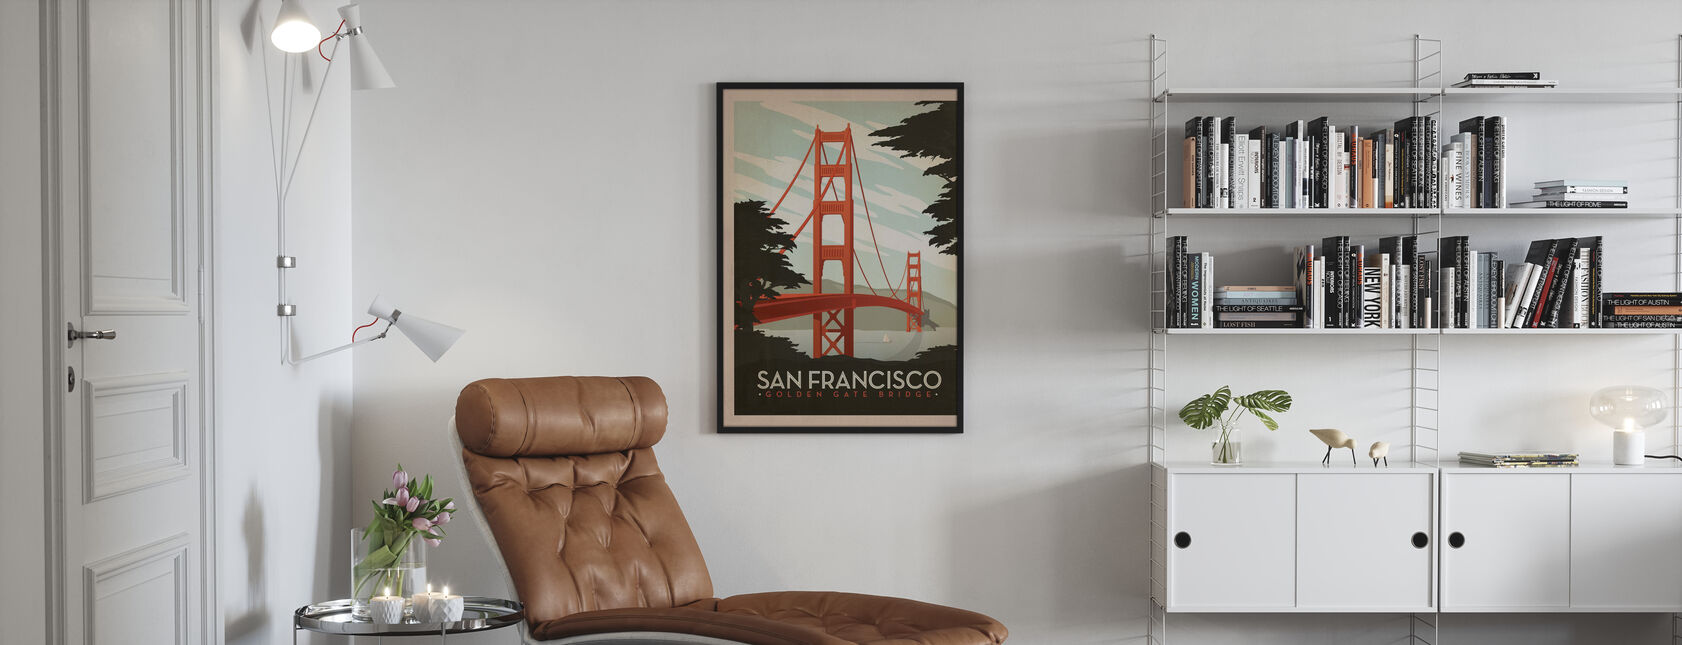 San Francisco - Poster - Living Room